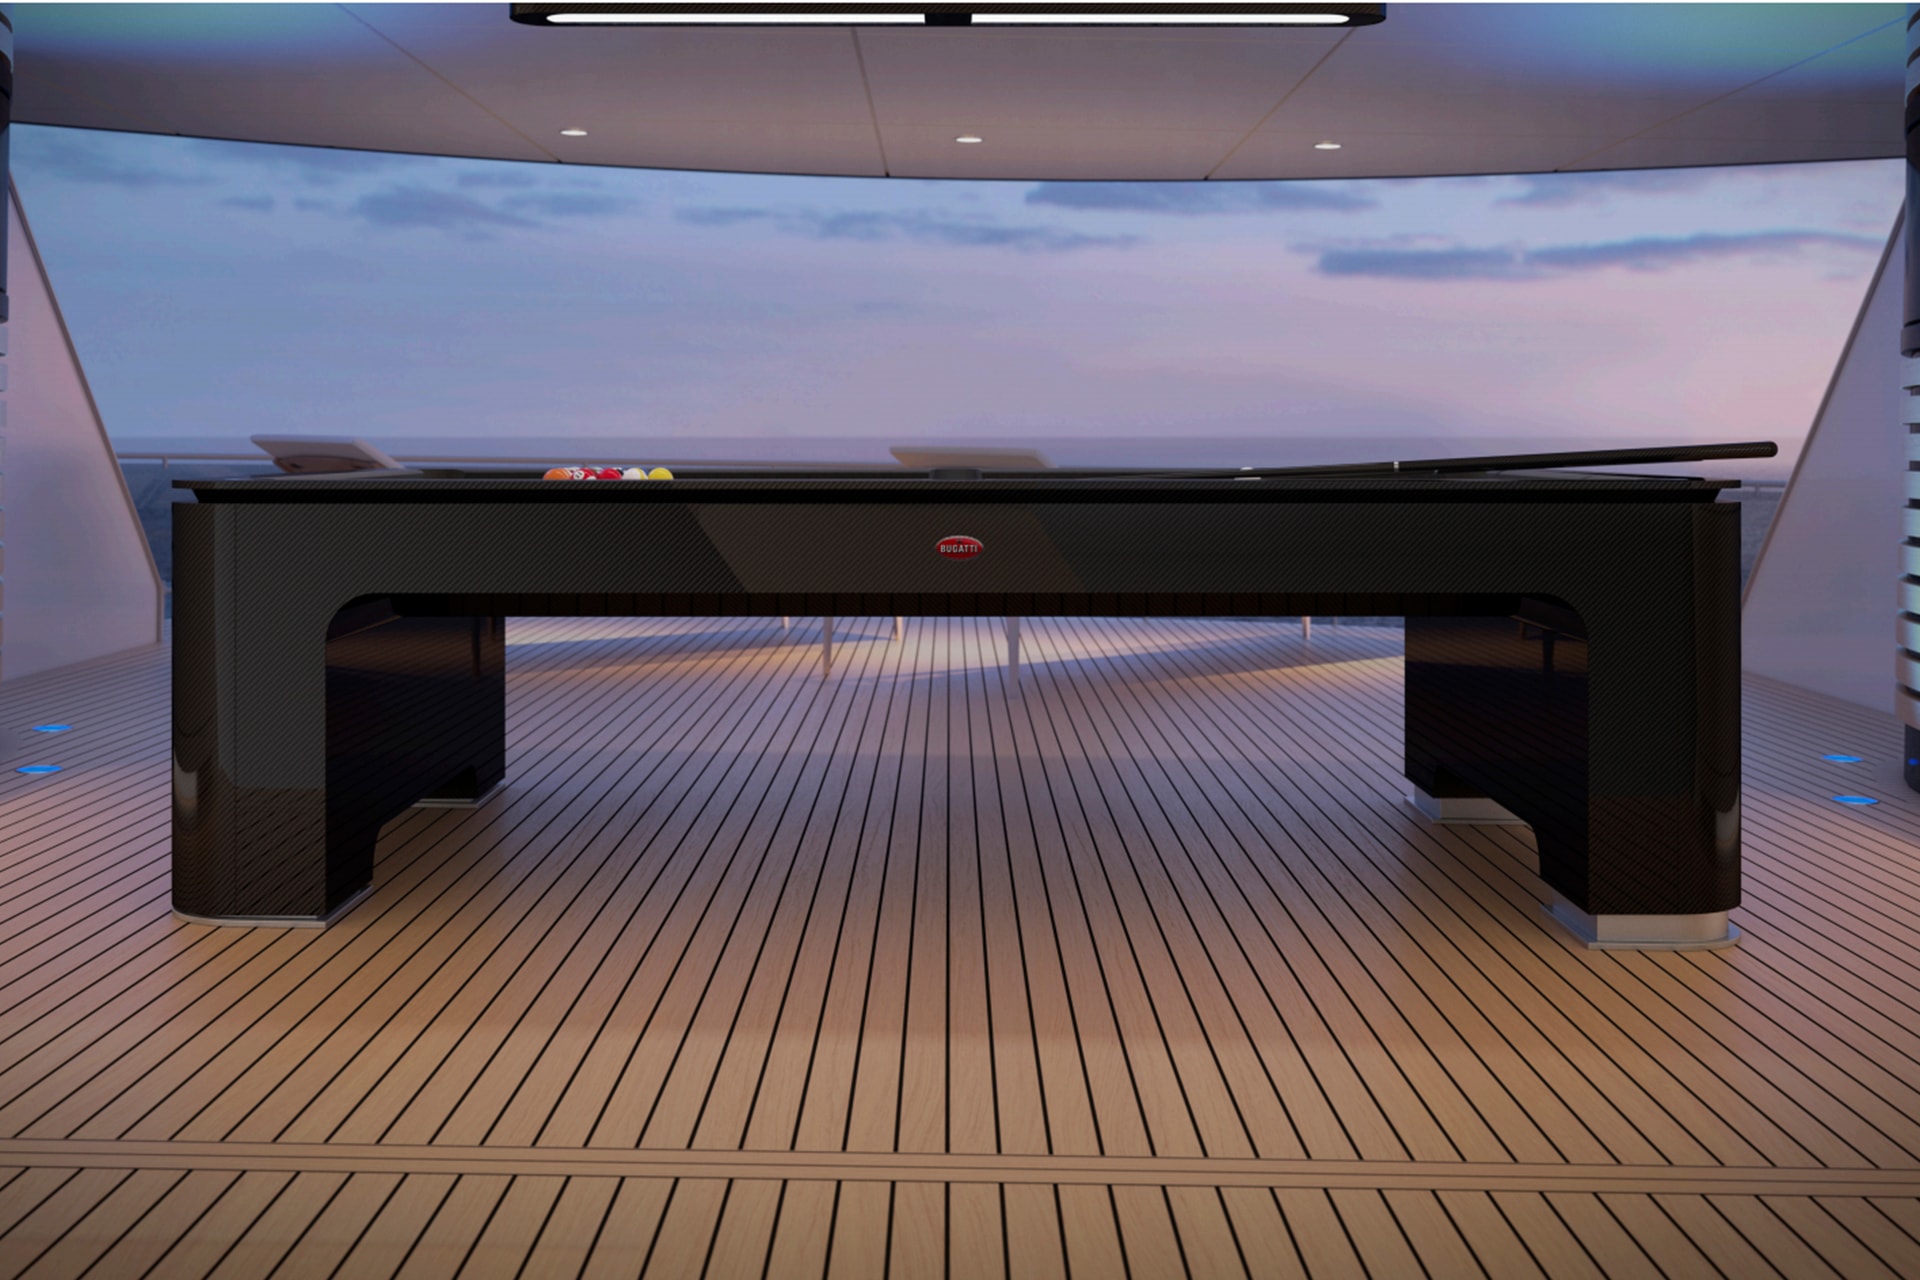 IXO Iconic Xtrem Objects Bugatti carbon pool table carbon fiber titanium luxury Italian Spanish design home IXO  Industrial Design